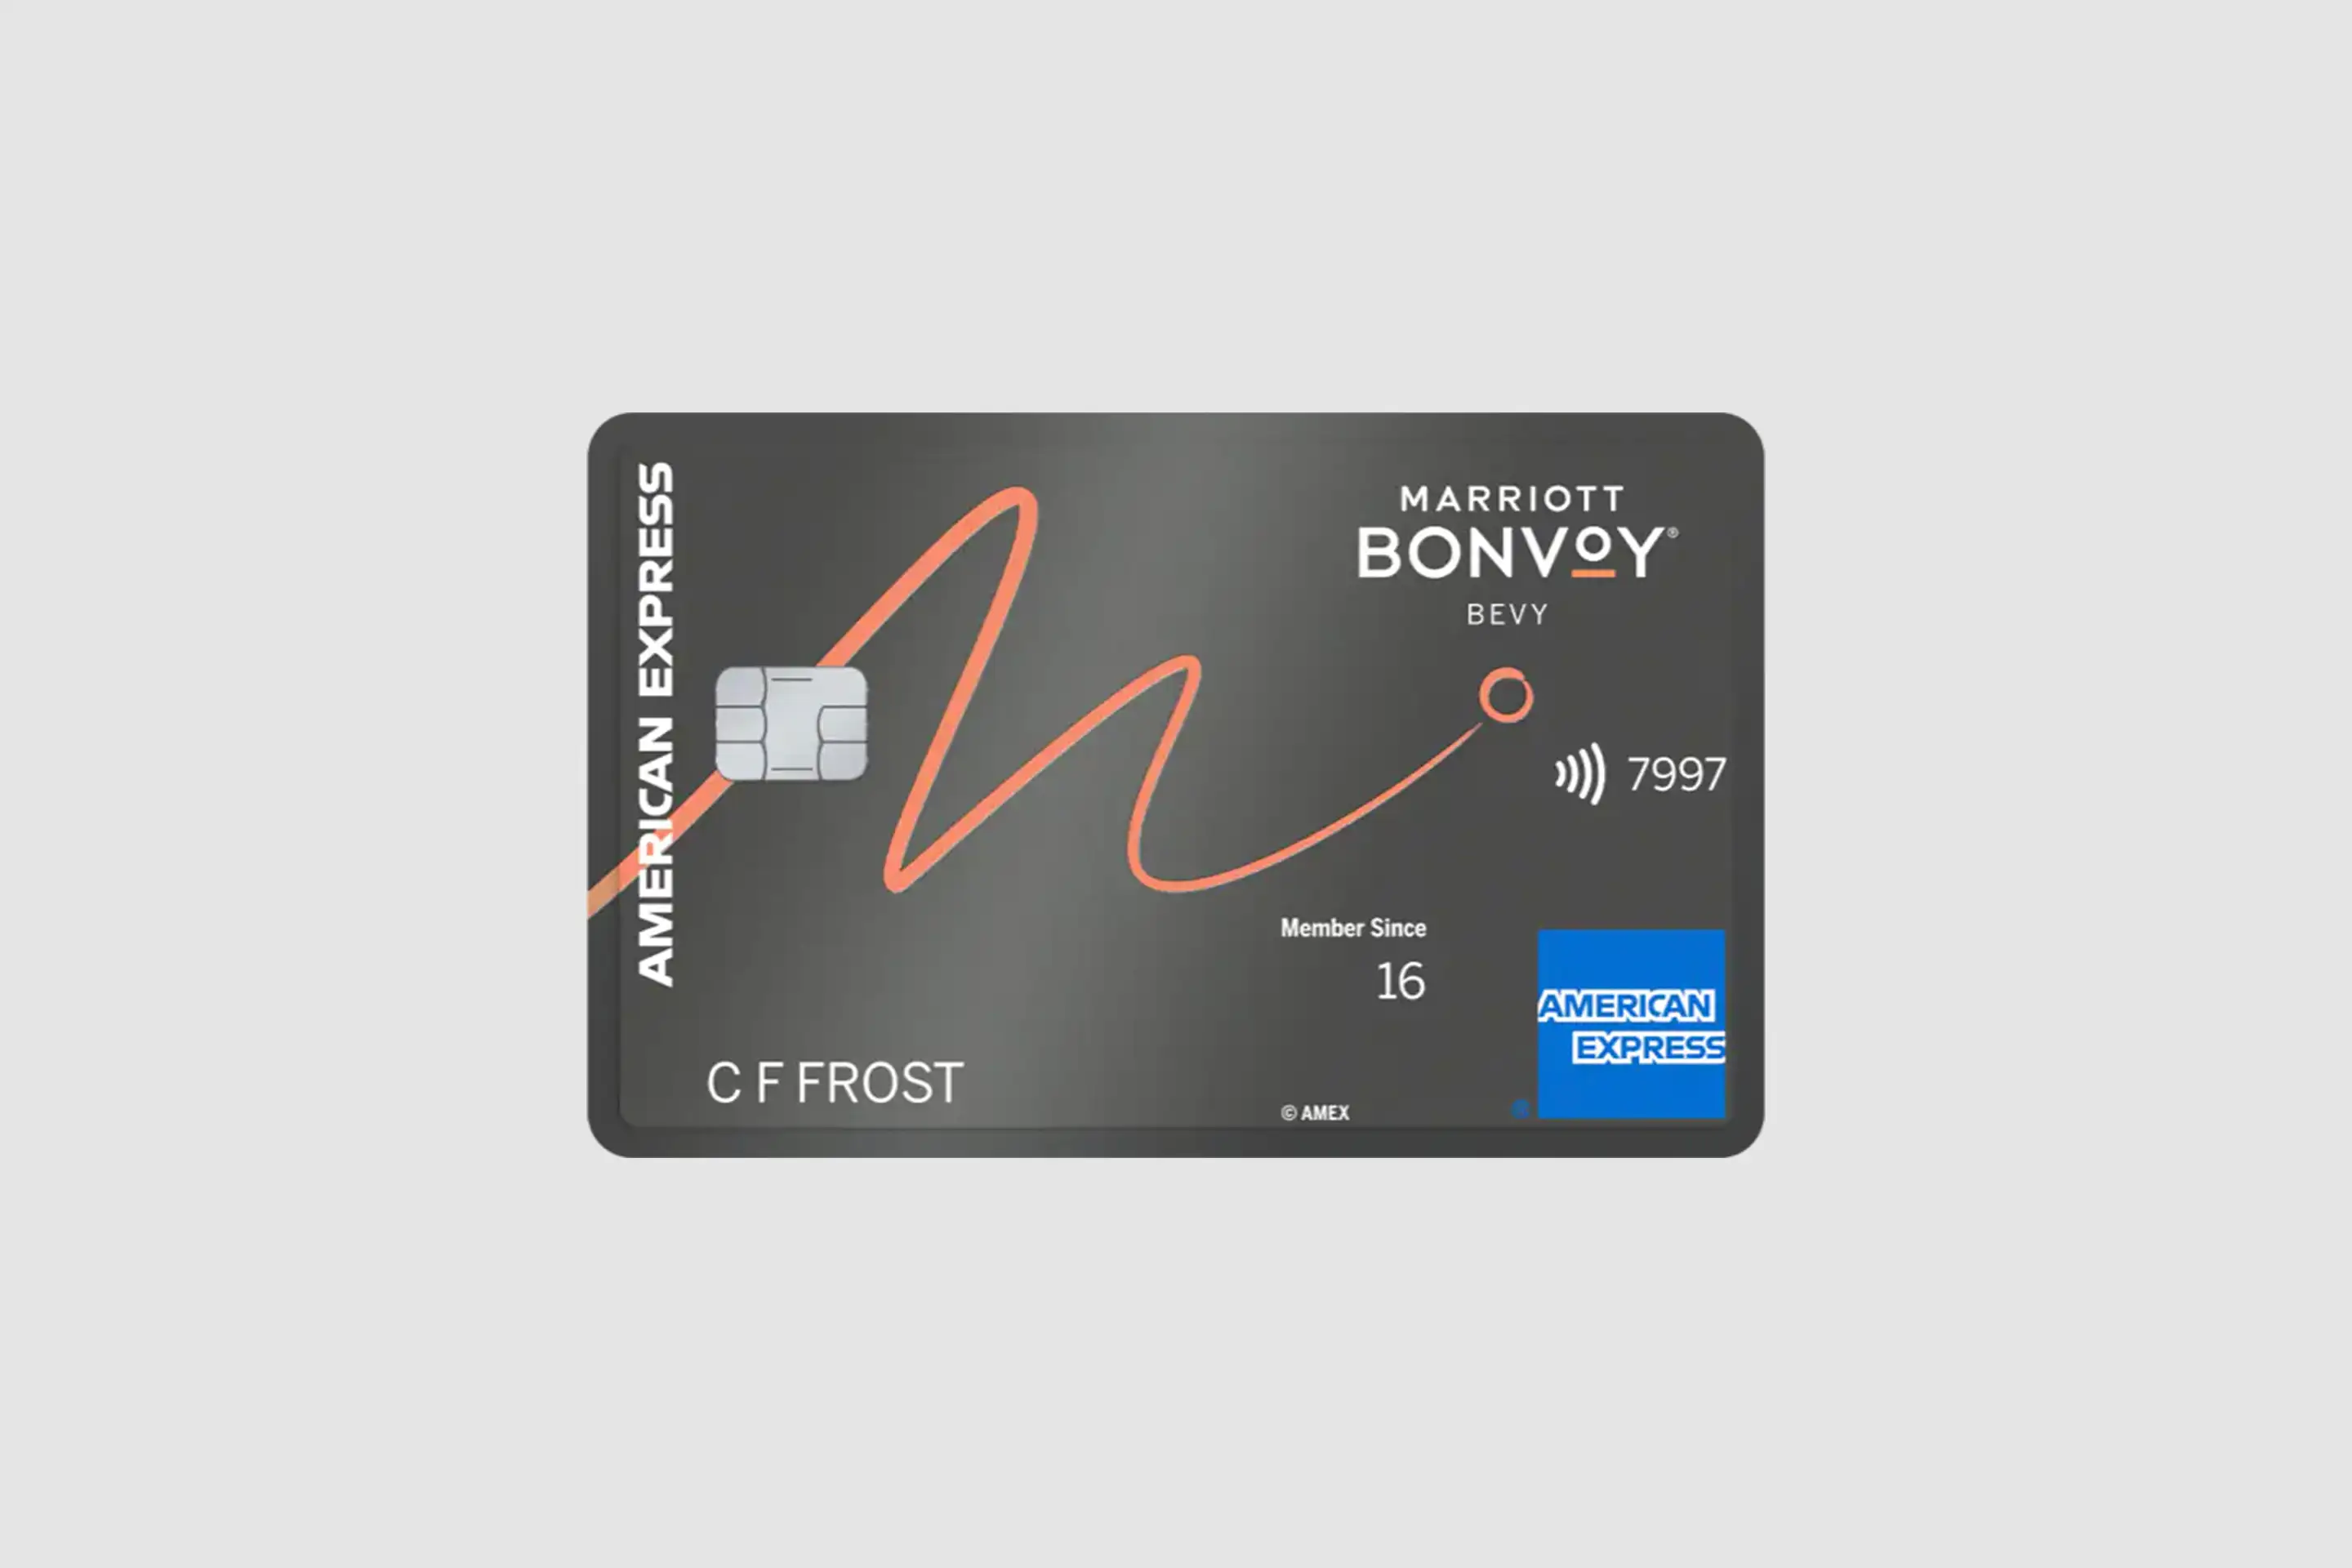 American Express Marriott Bonvoy Bevy Credit Card